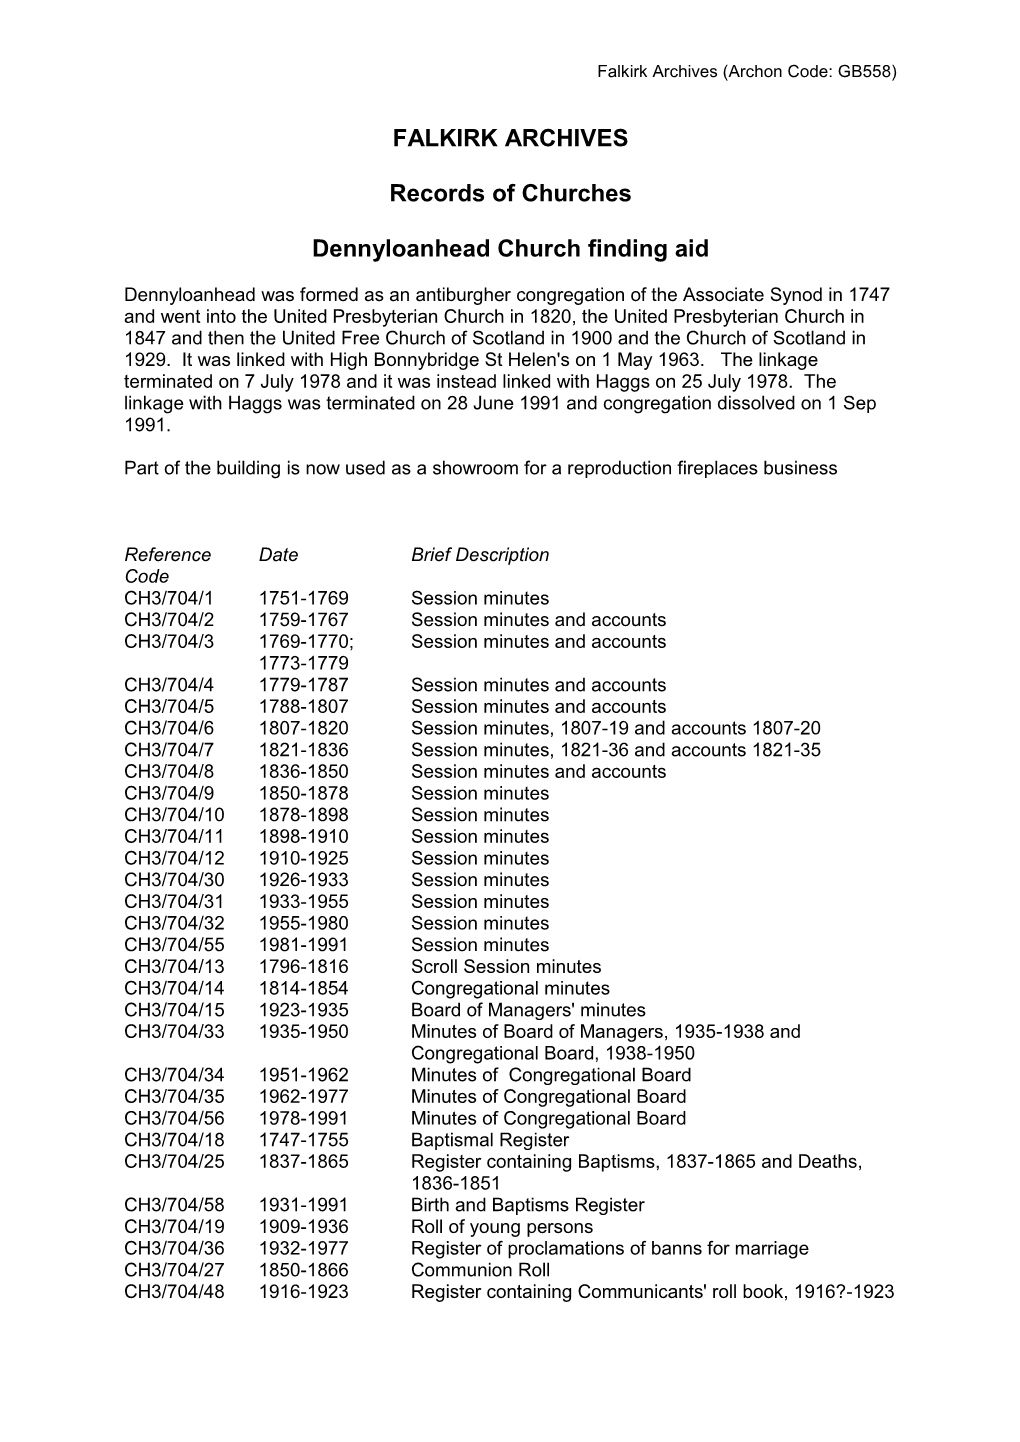 Dennyloanhead Church Finding Aid